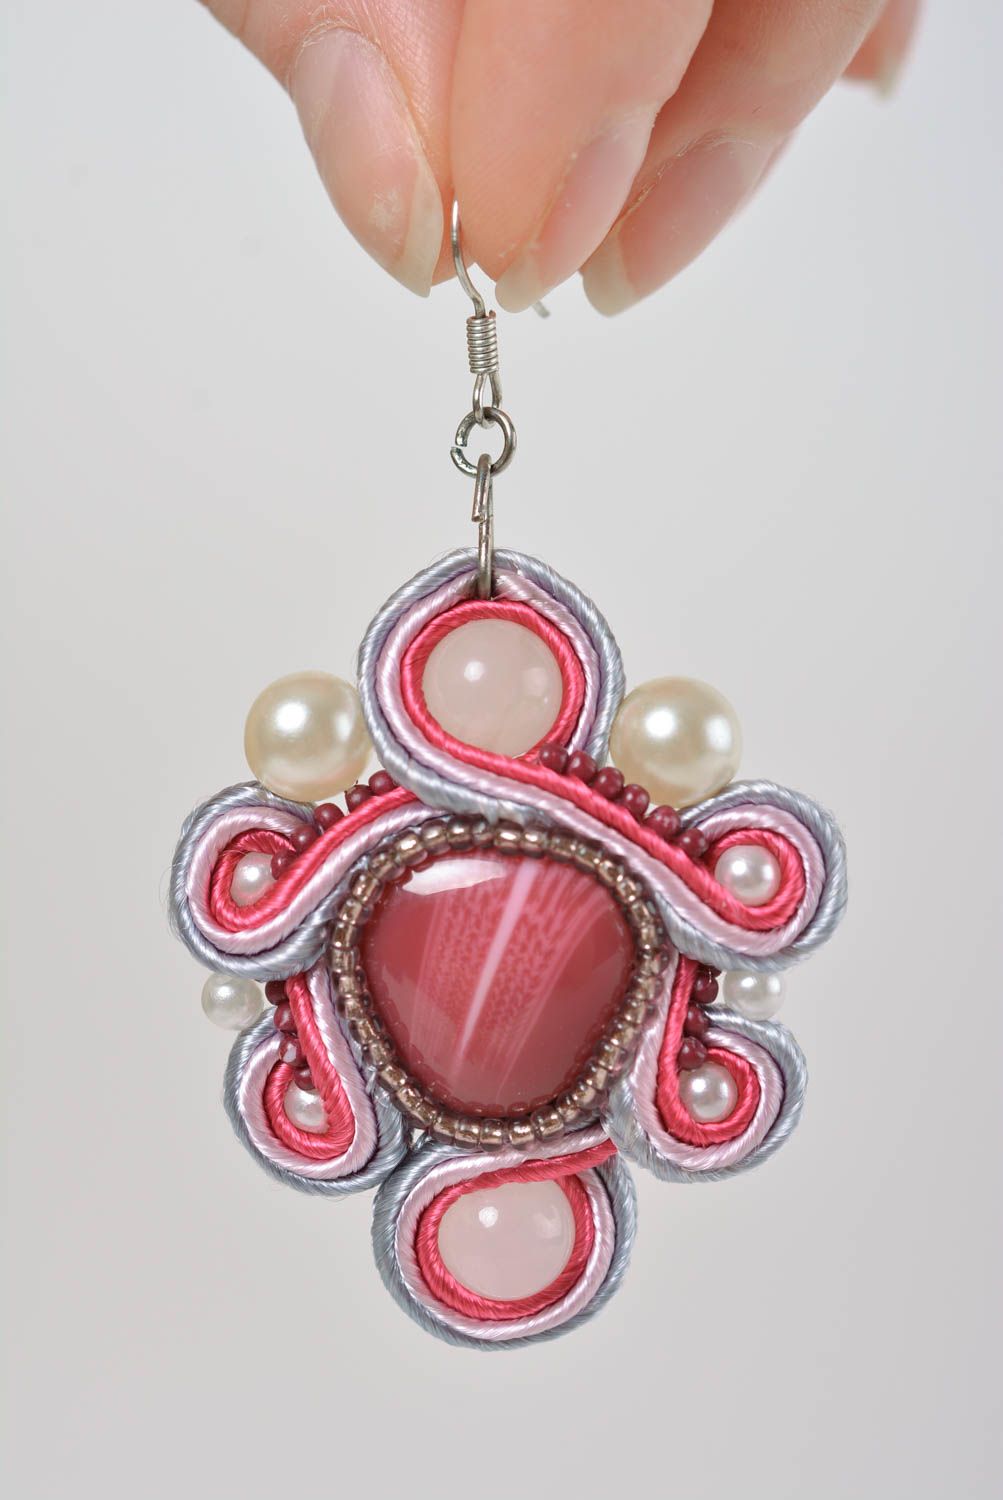 Handmade earrings soutache earrings soutache jewelry with natural stones photo 4